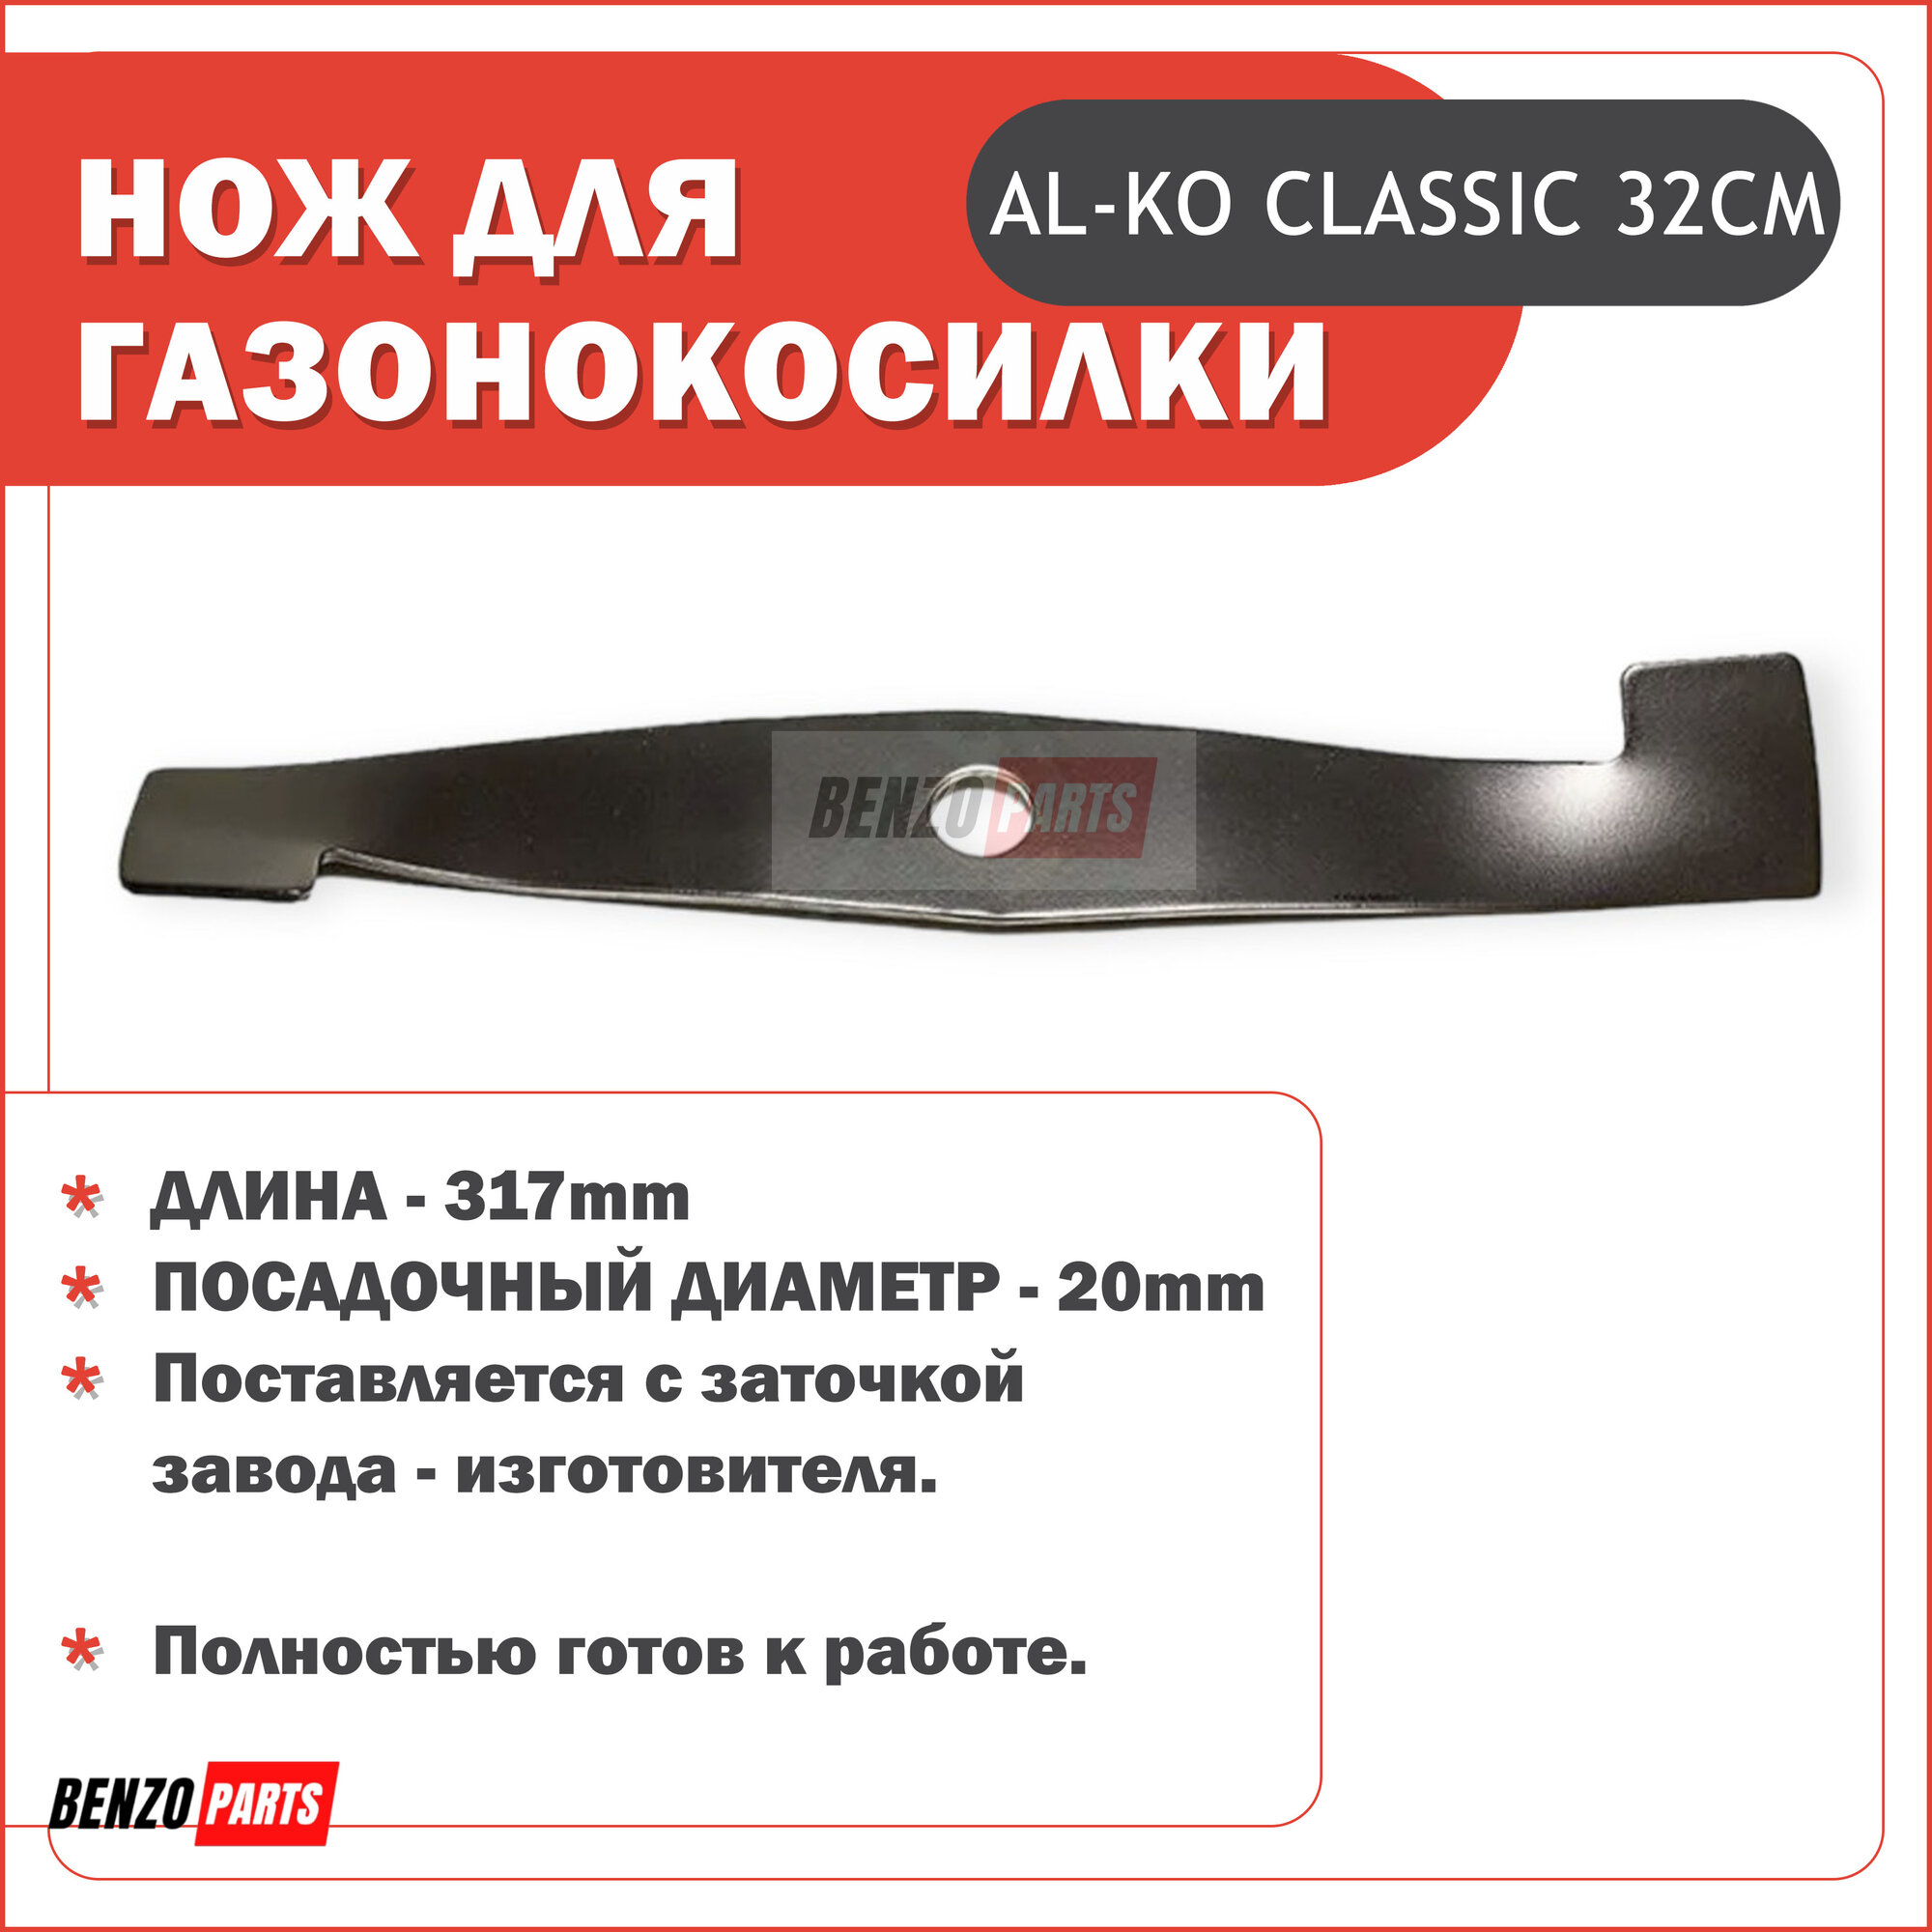 Нож для газонокосилки AL-KO Classic 3.2 32 см A470206 (112661 112660 112725) посадка 20мм.